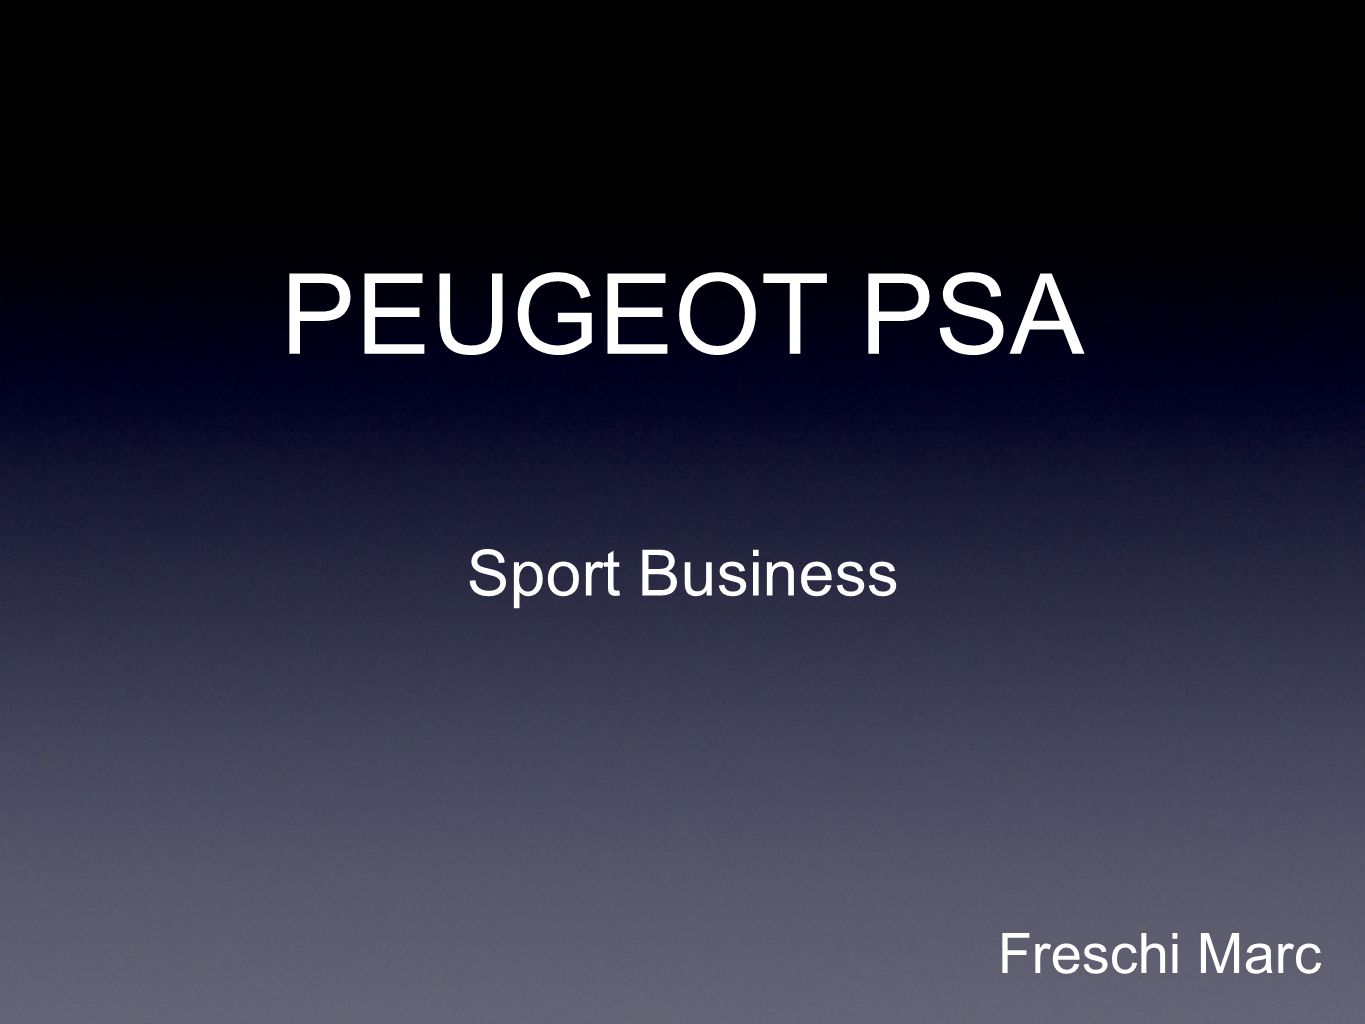 PEUGEOT PSA Sport Business Freschi Marc